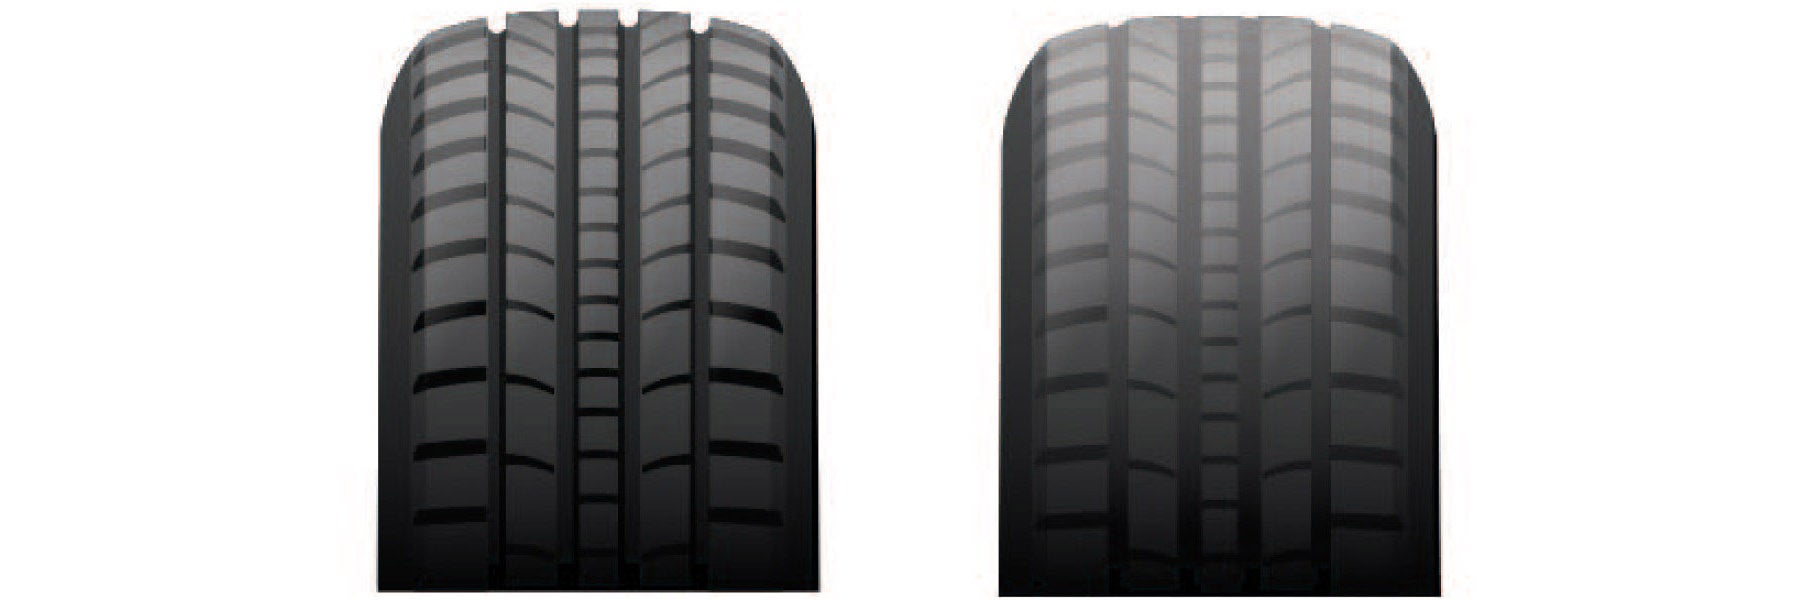 Tire tread depth comparison at Feldman Kia of Novi in Novi MI